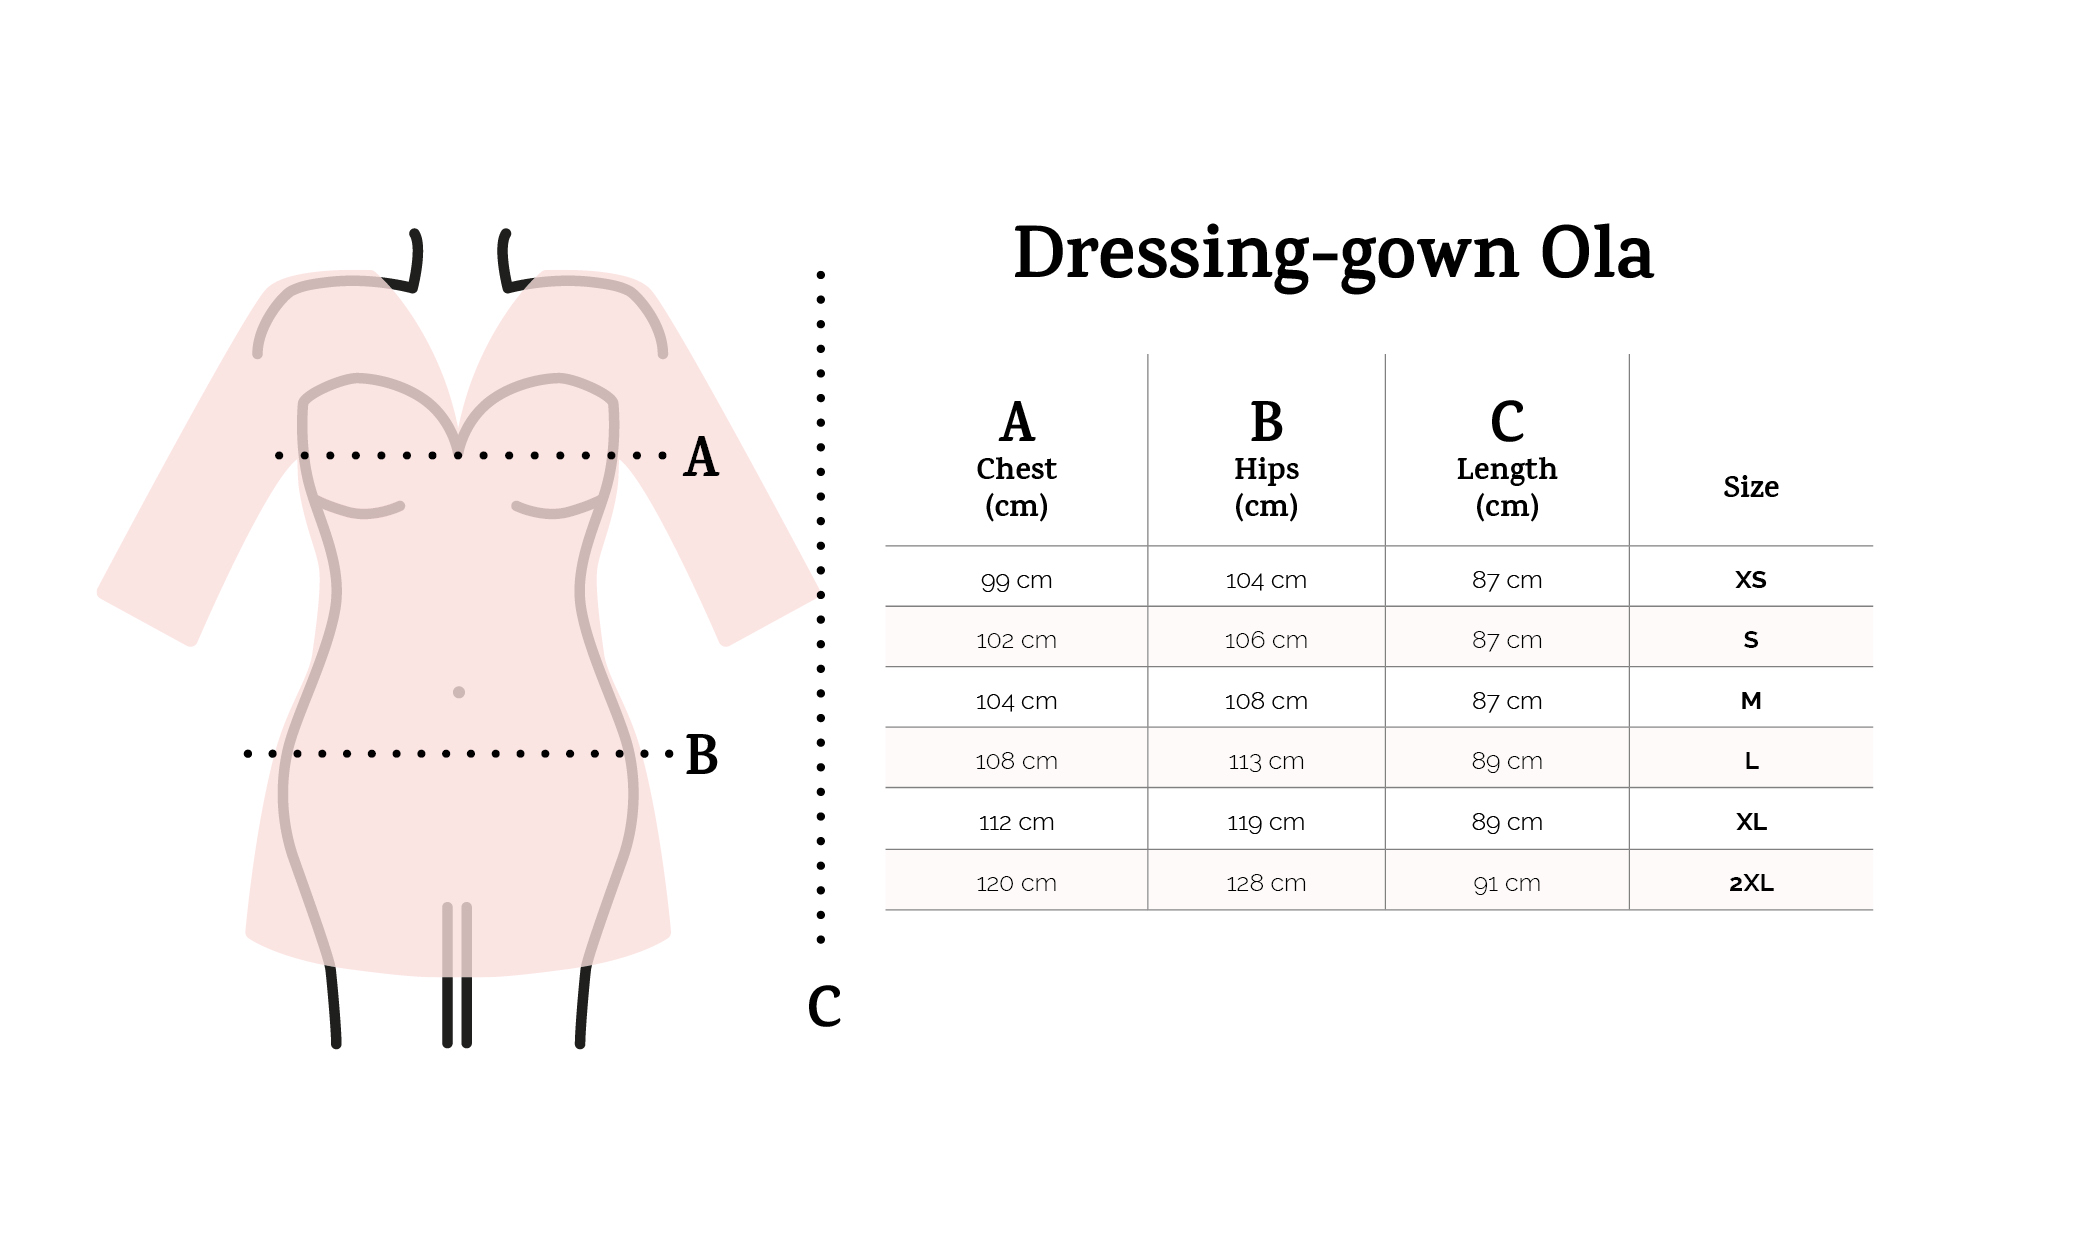 Dressing-gown Ola